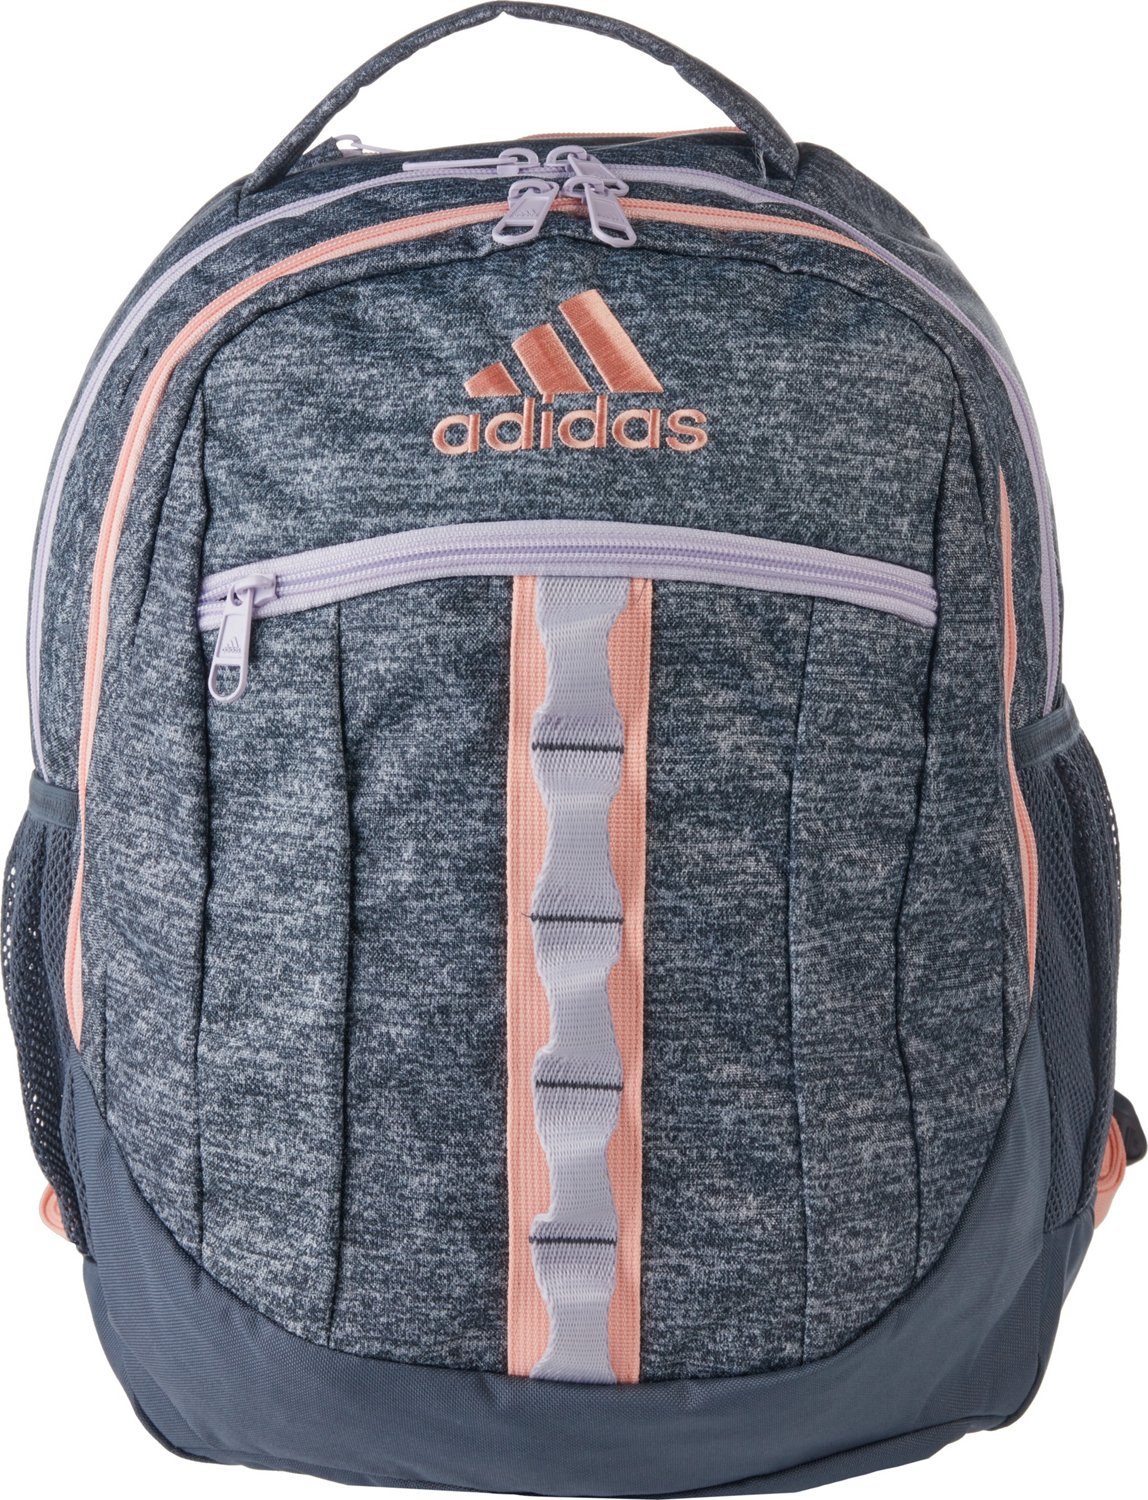 academy sports adidas backpacks